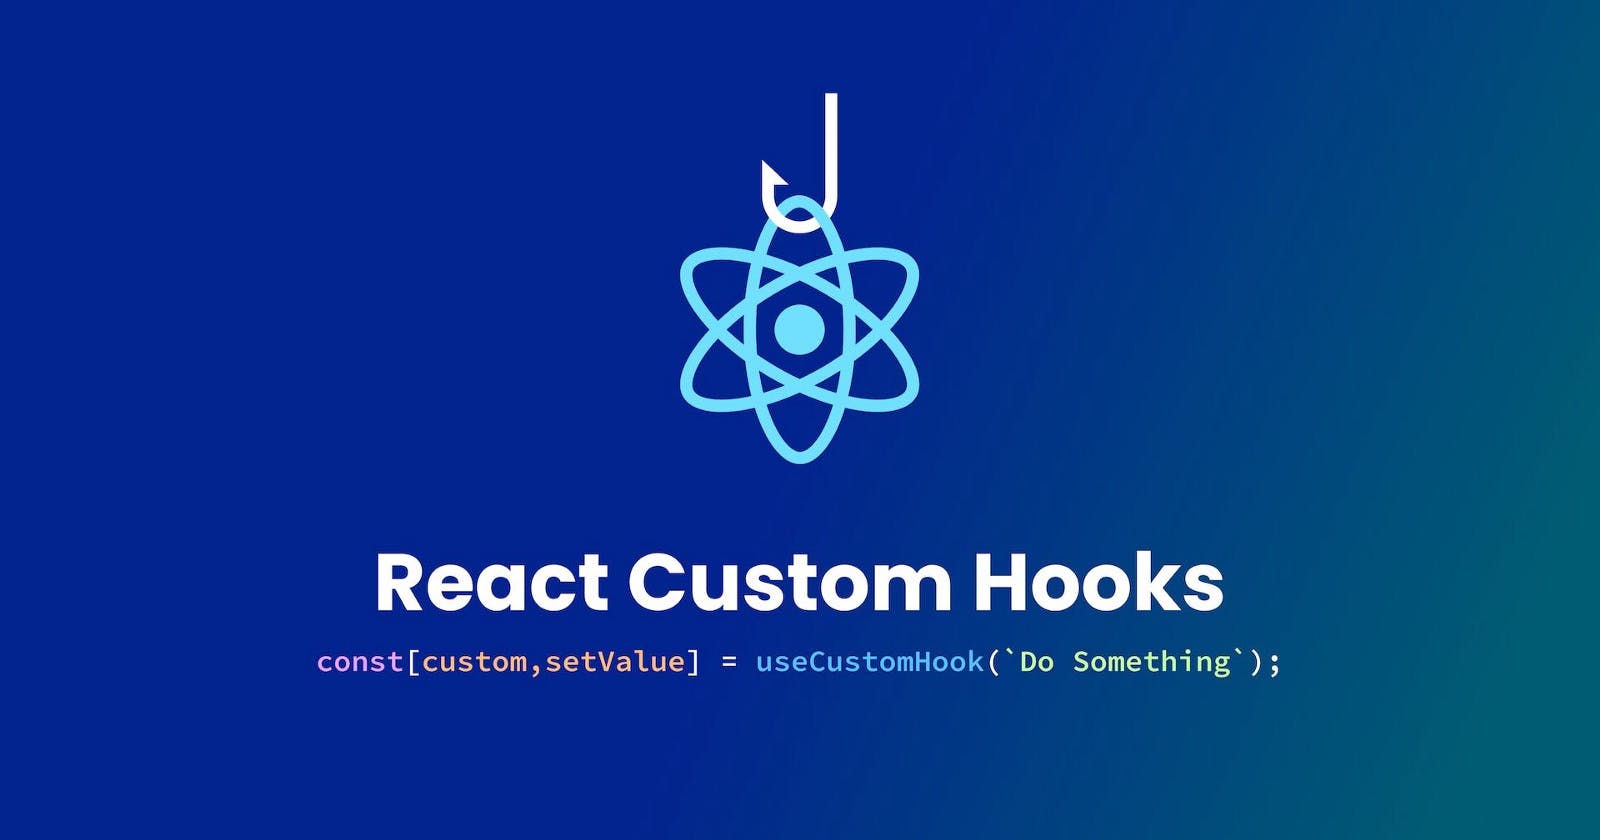 Creating Custom Hooks in React